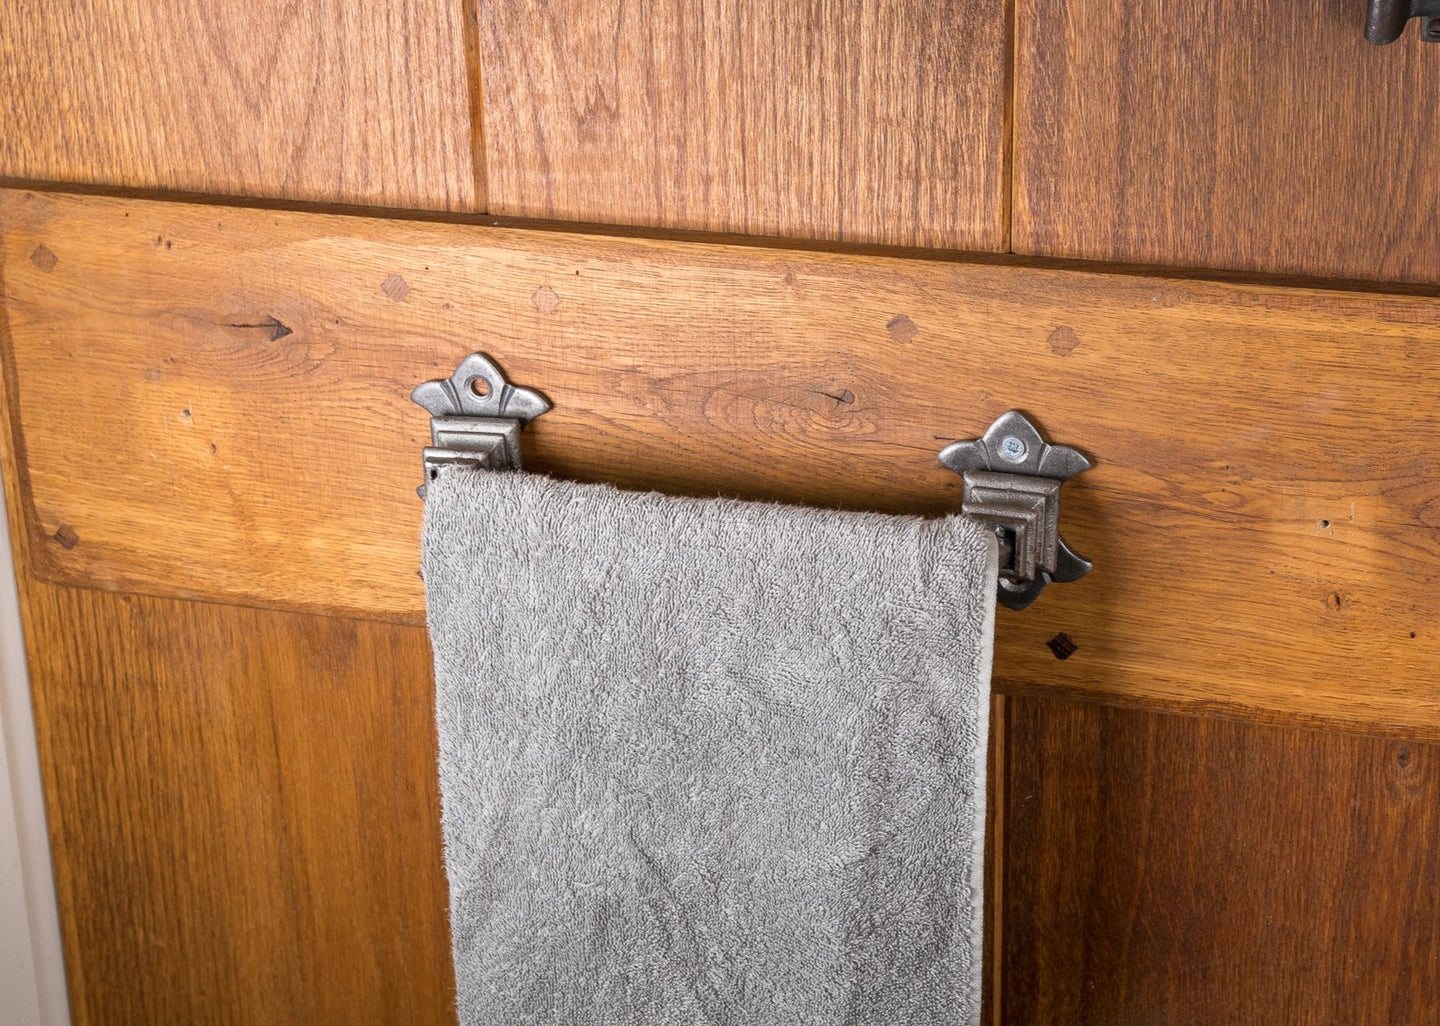 Gothic towel rail